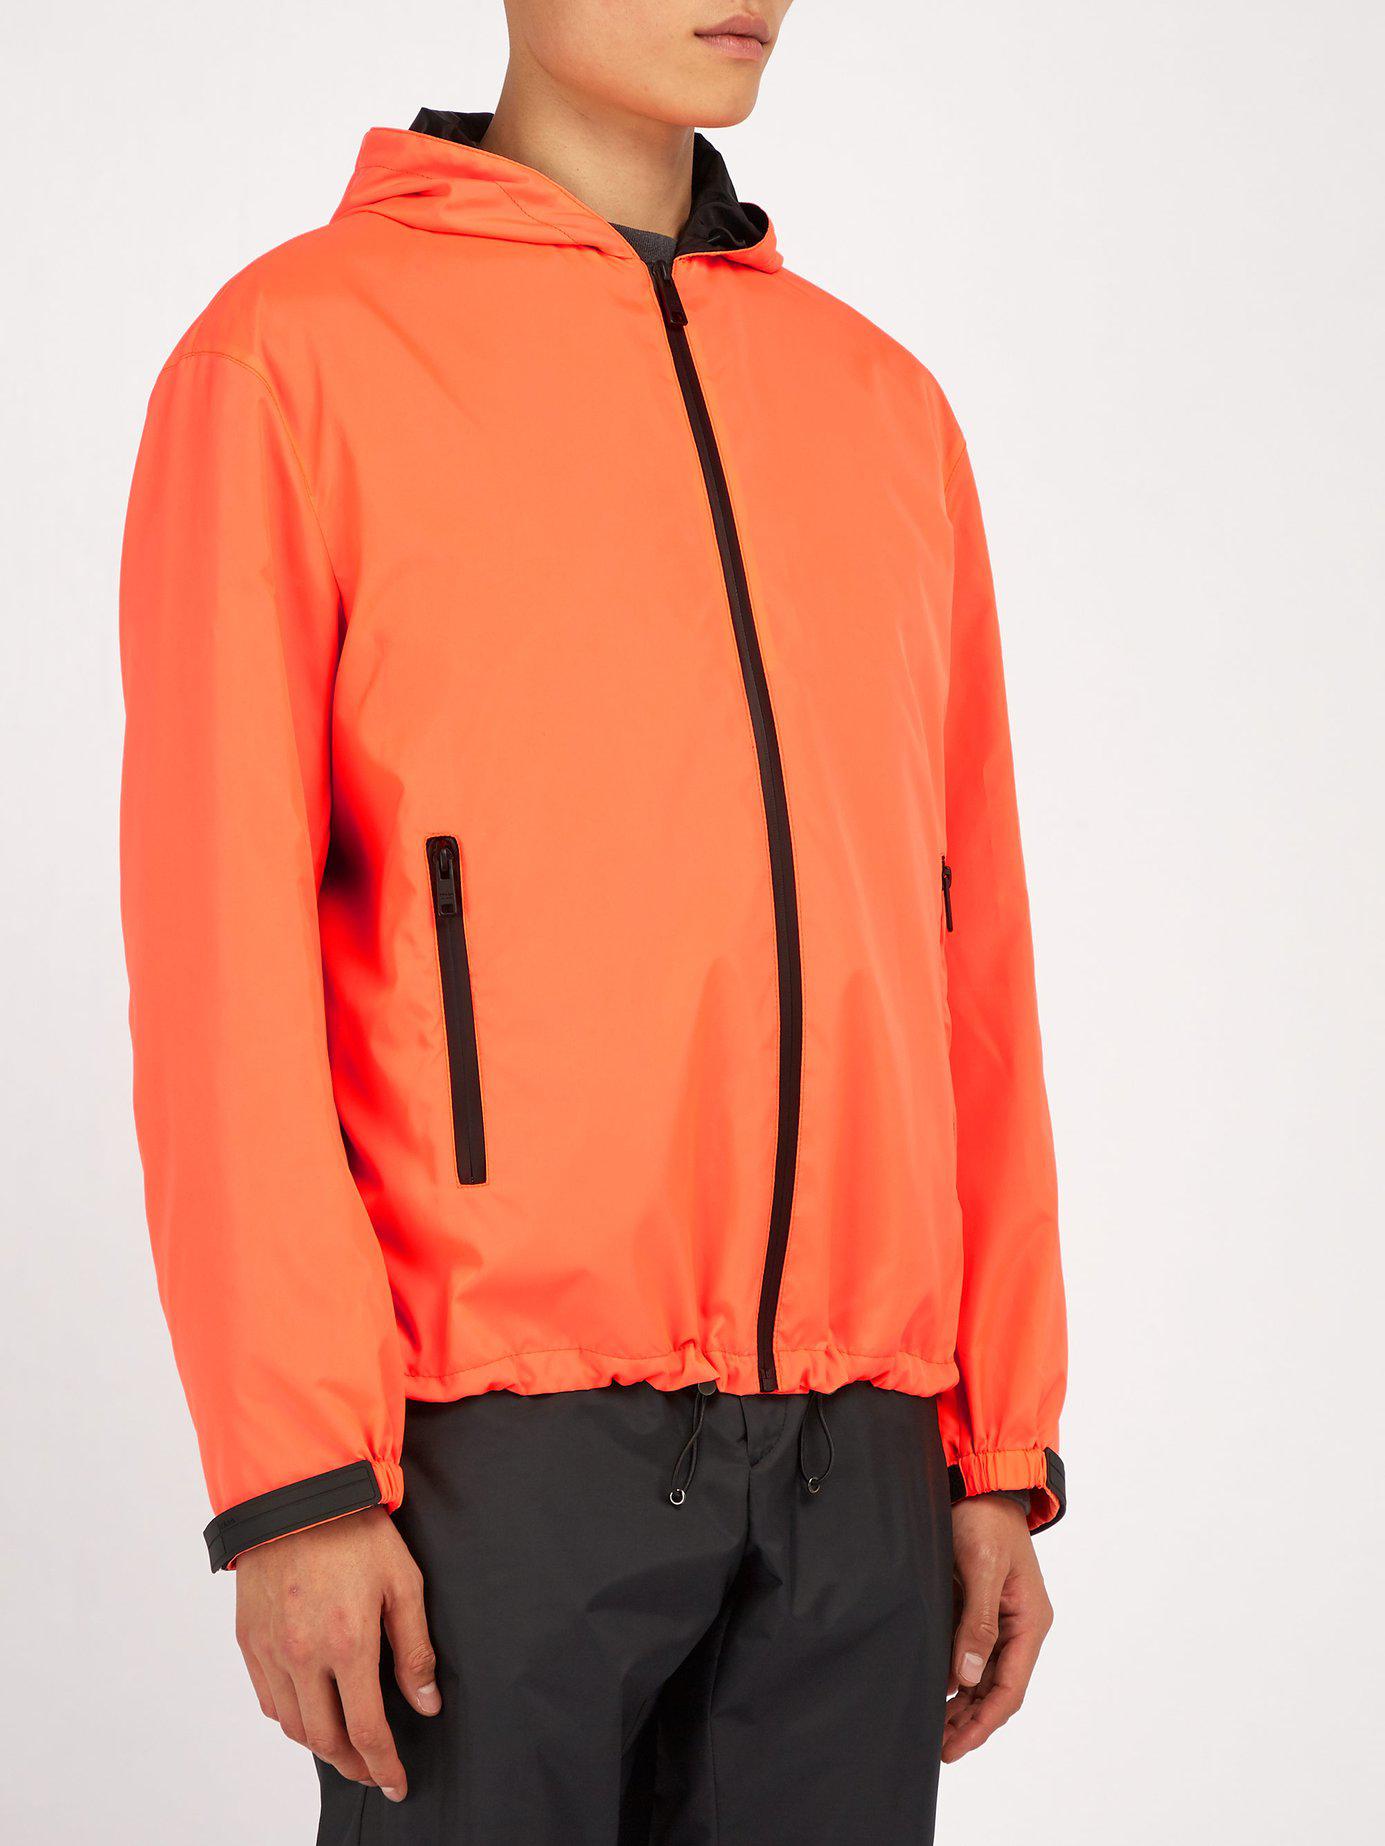 Prada Shell Hooded Jacket in Coral (Orange) for Men - Lyst